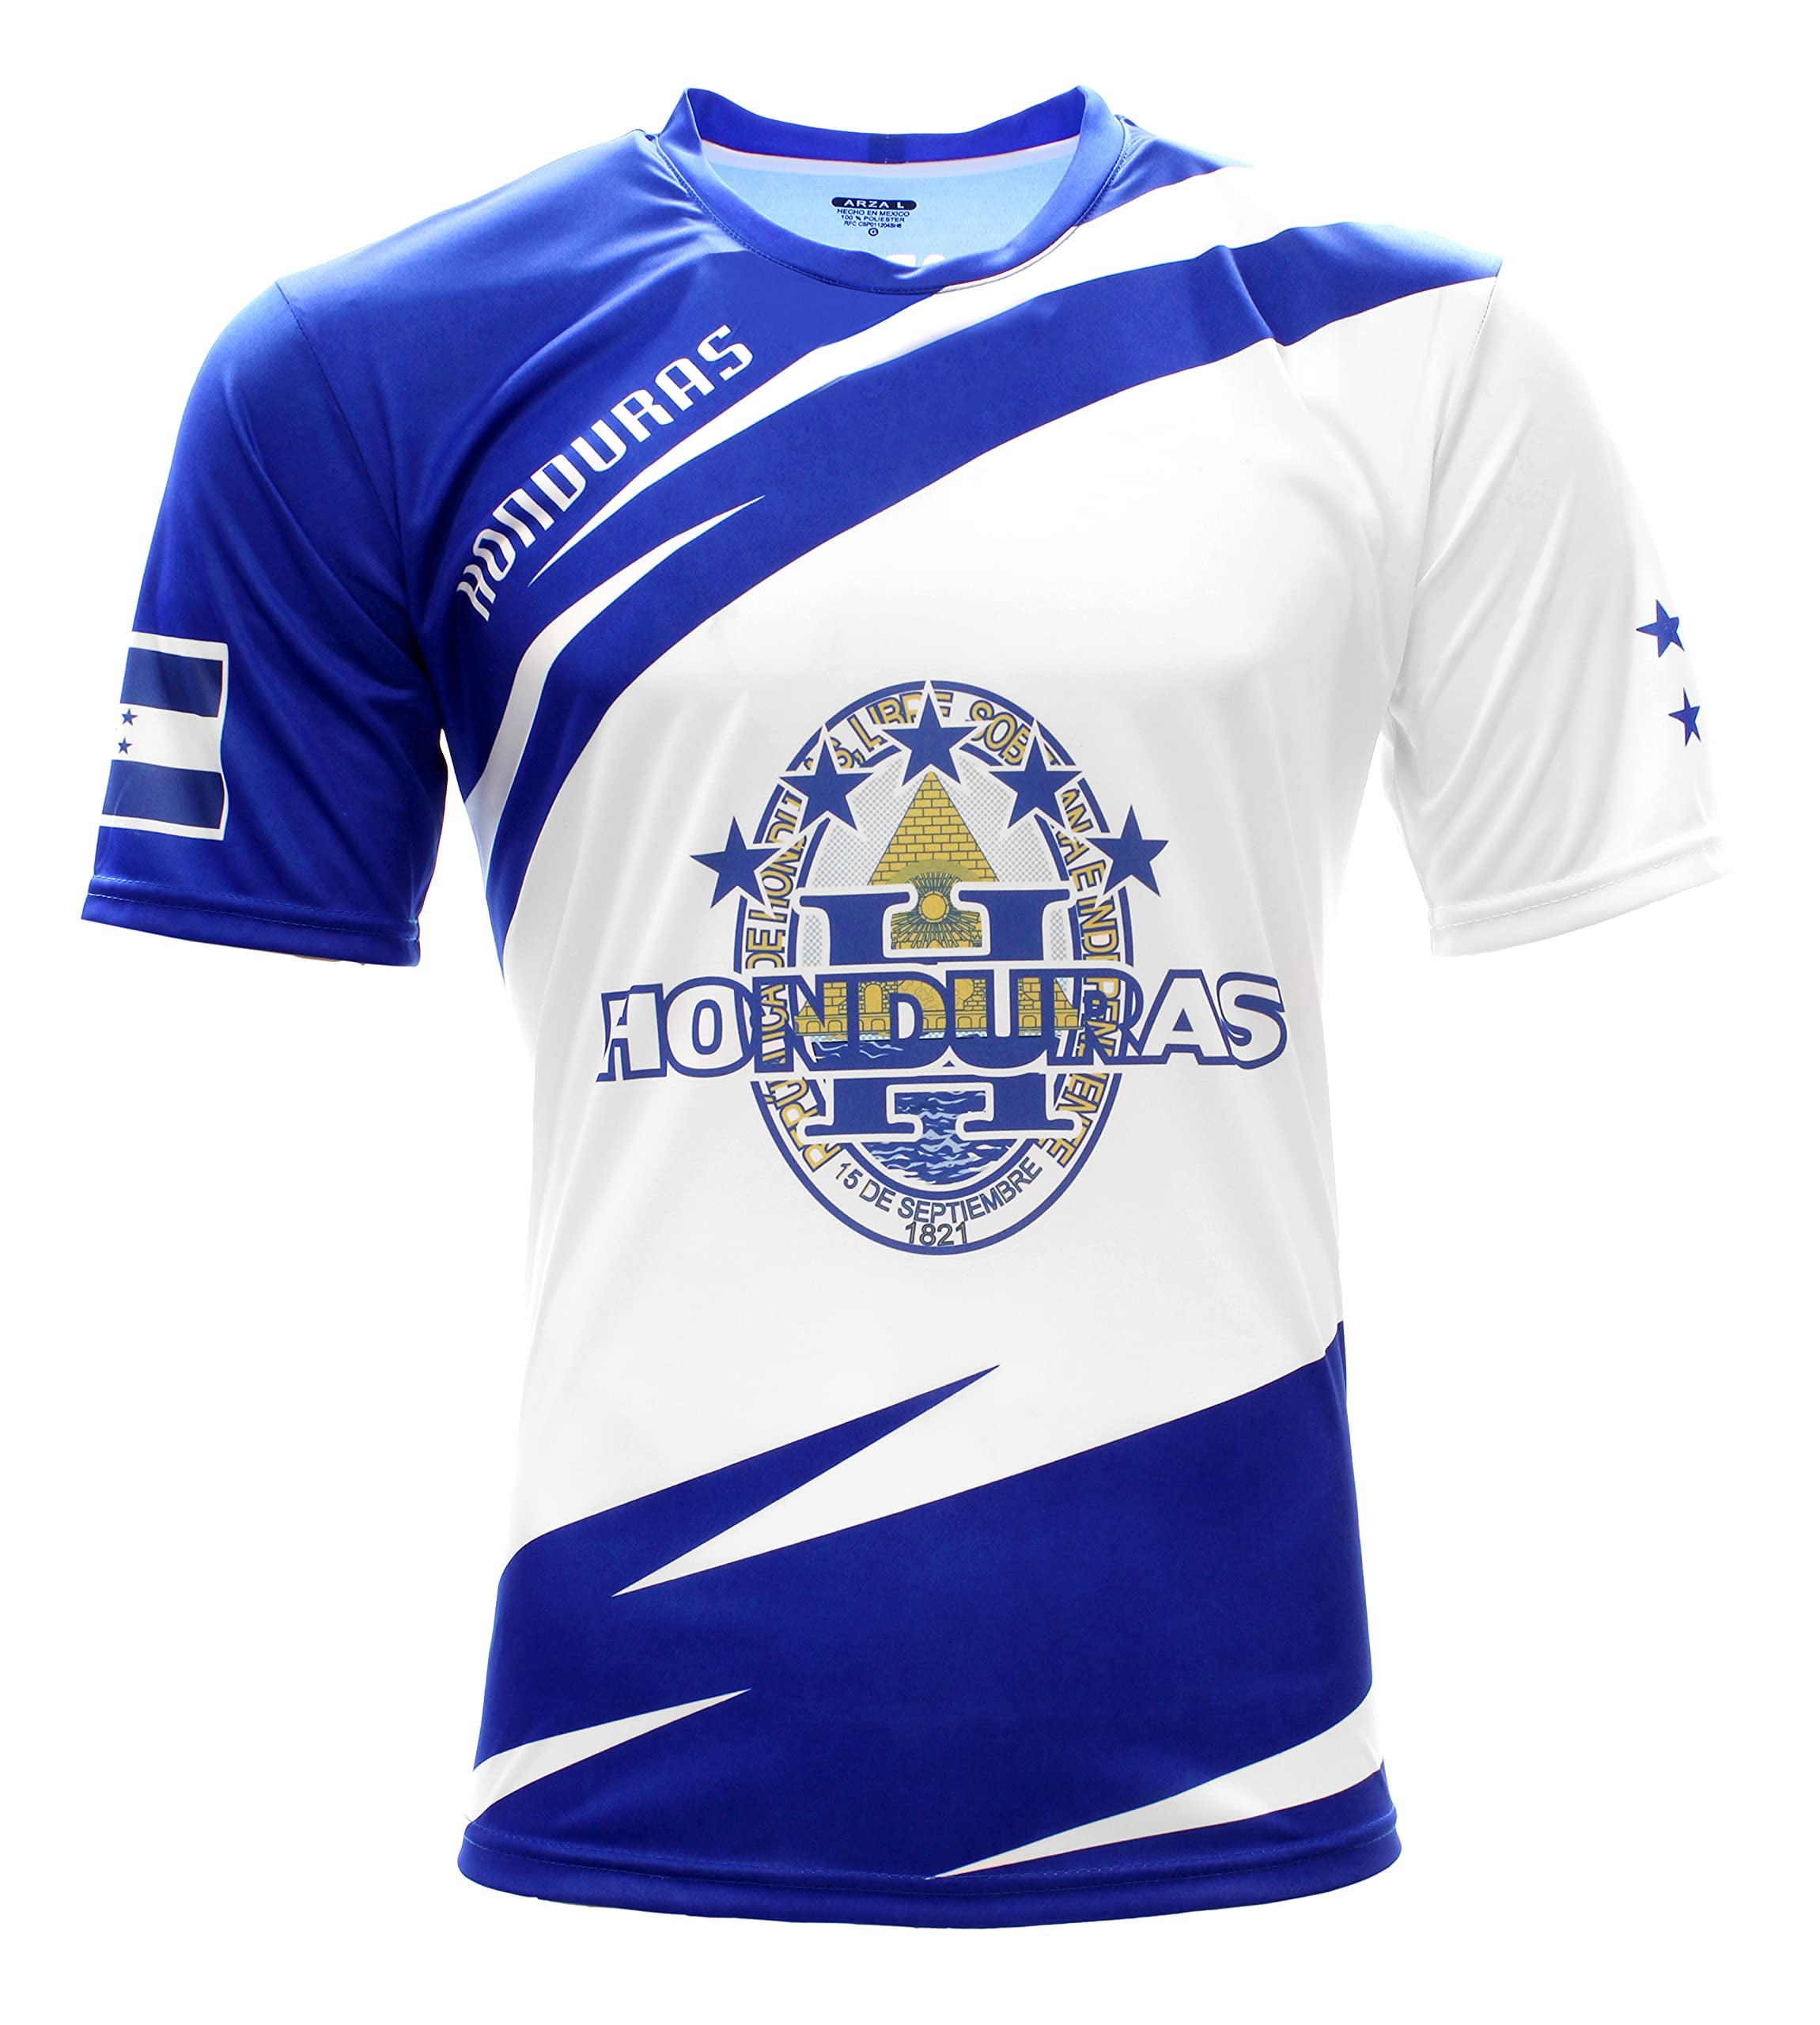 Honduras Arza Youth Soccer Uniform 